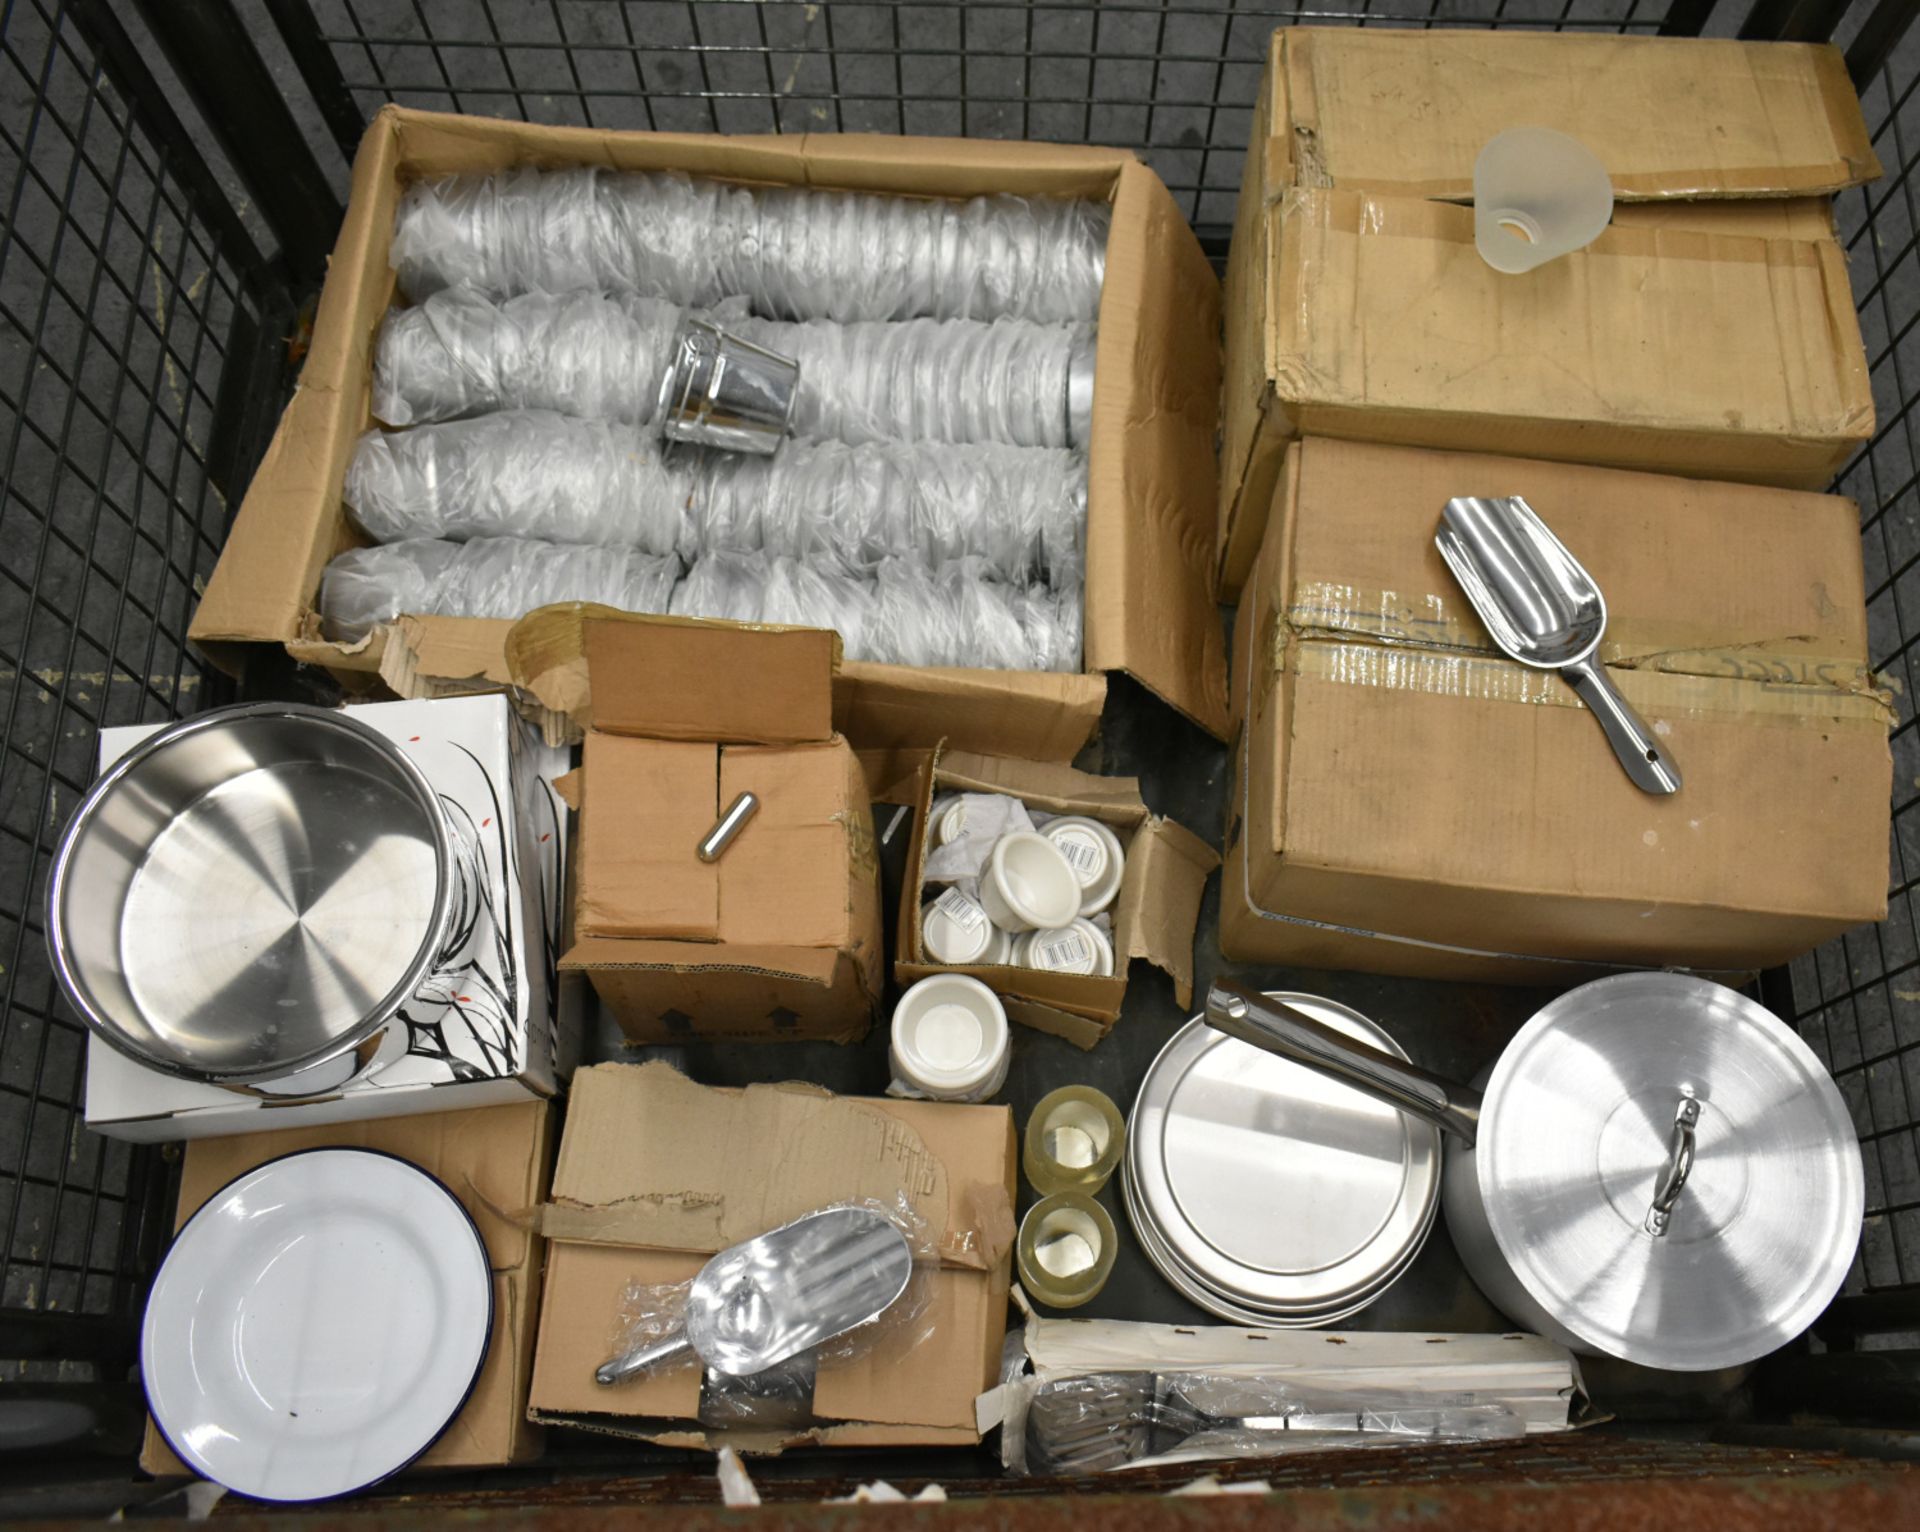 Metal bucket chip servers, metal scoops, cooking pot, 3oz ramekin dishes, plates, table ca